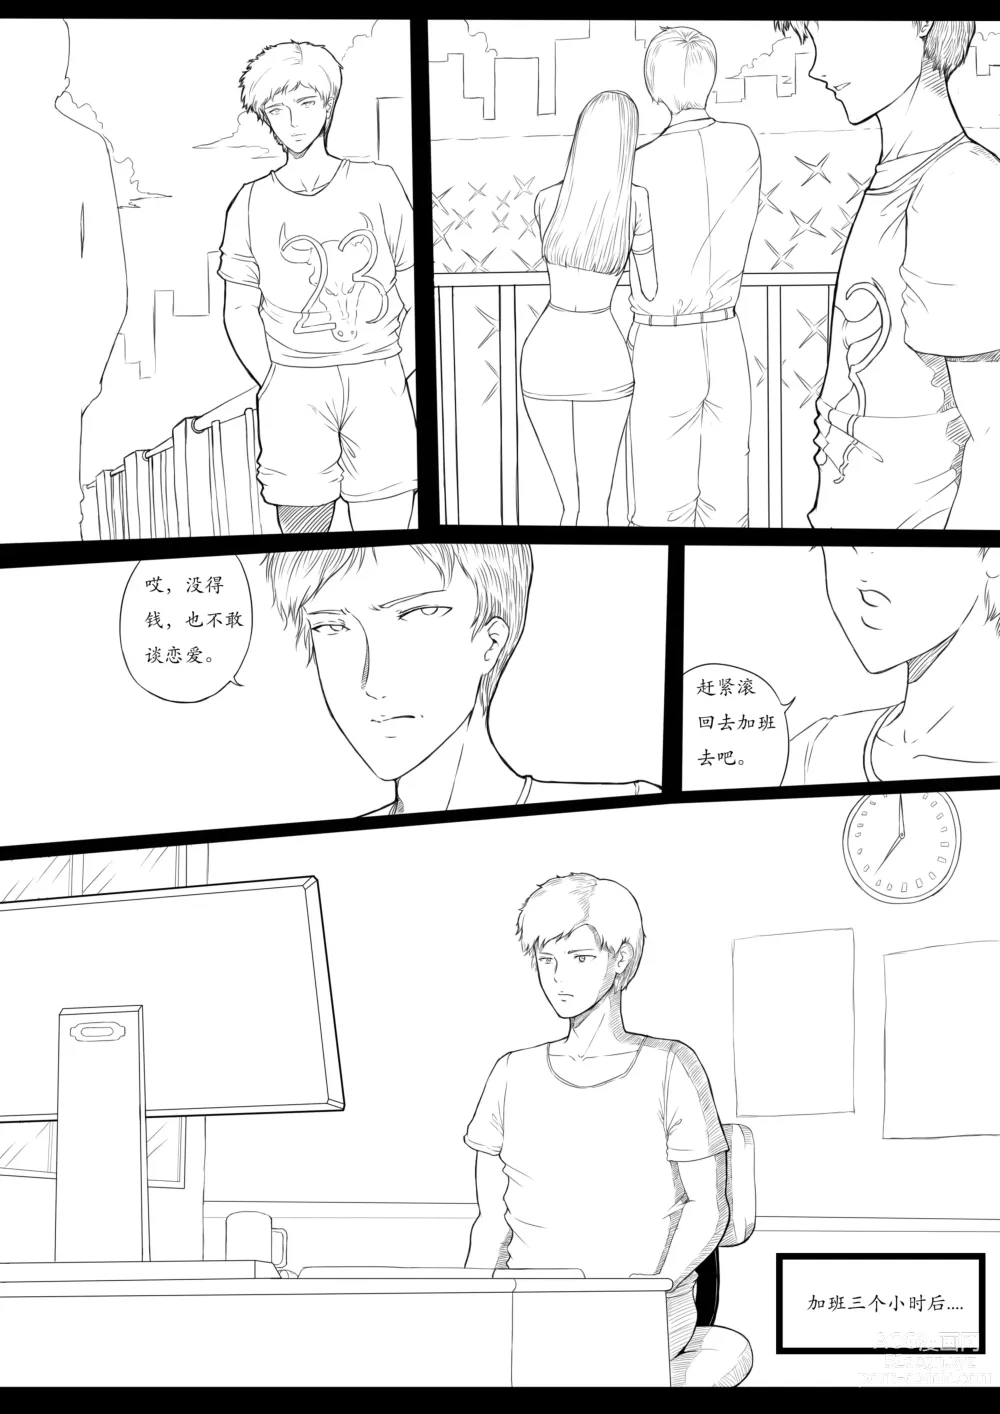 Page 5 of doujinshi 暗黑西游记第一集 V1 & V2